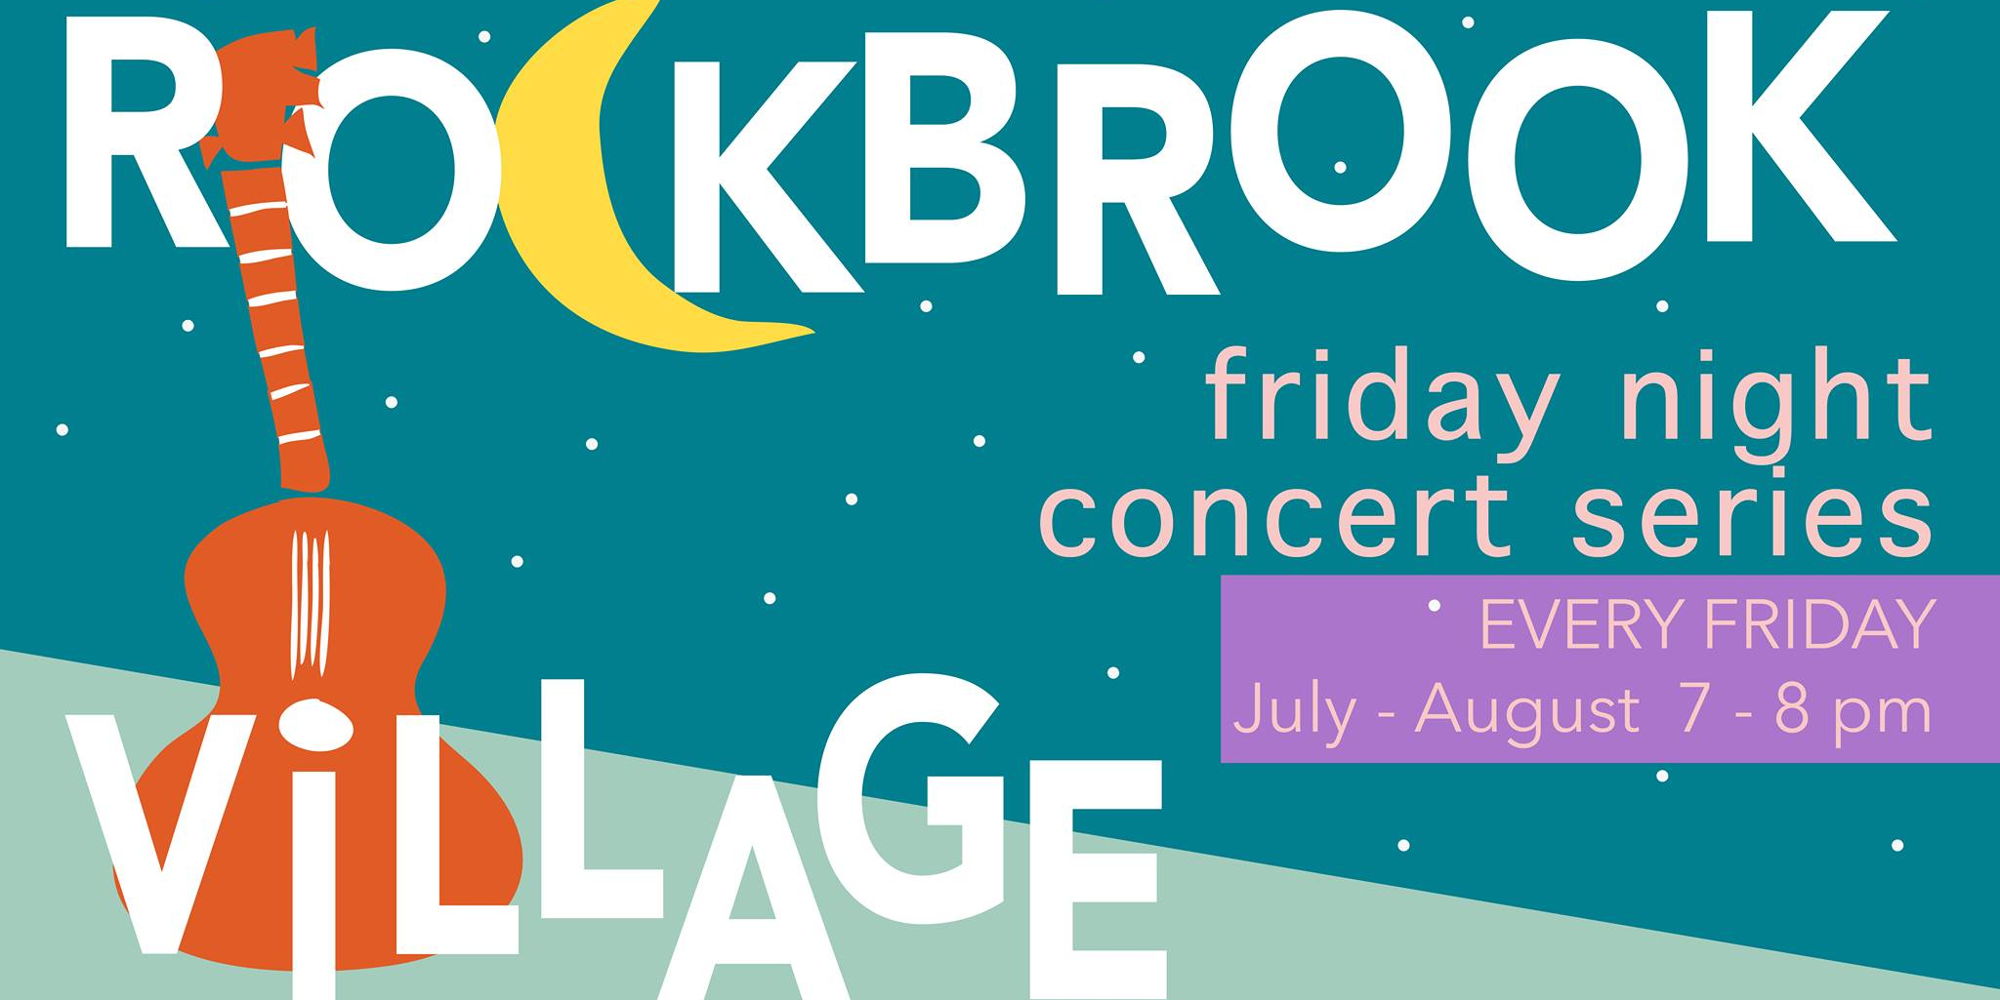 Rockbrook Village Friday Night Concert Series promotional image